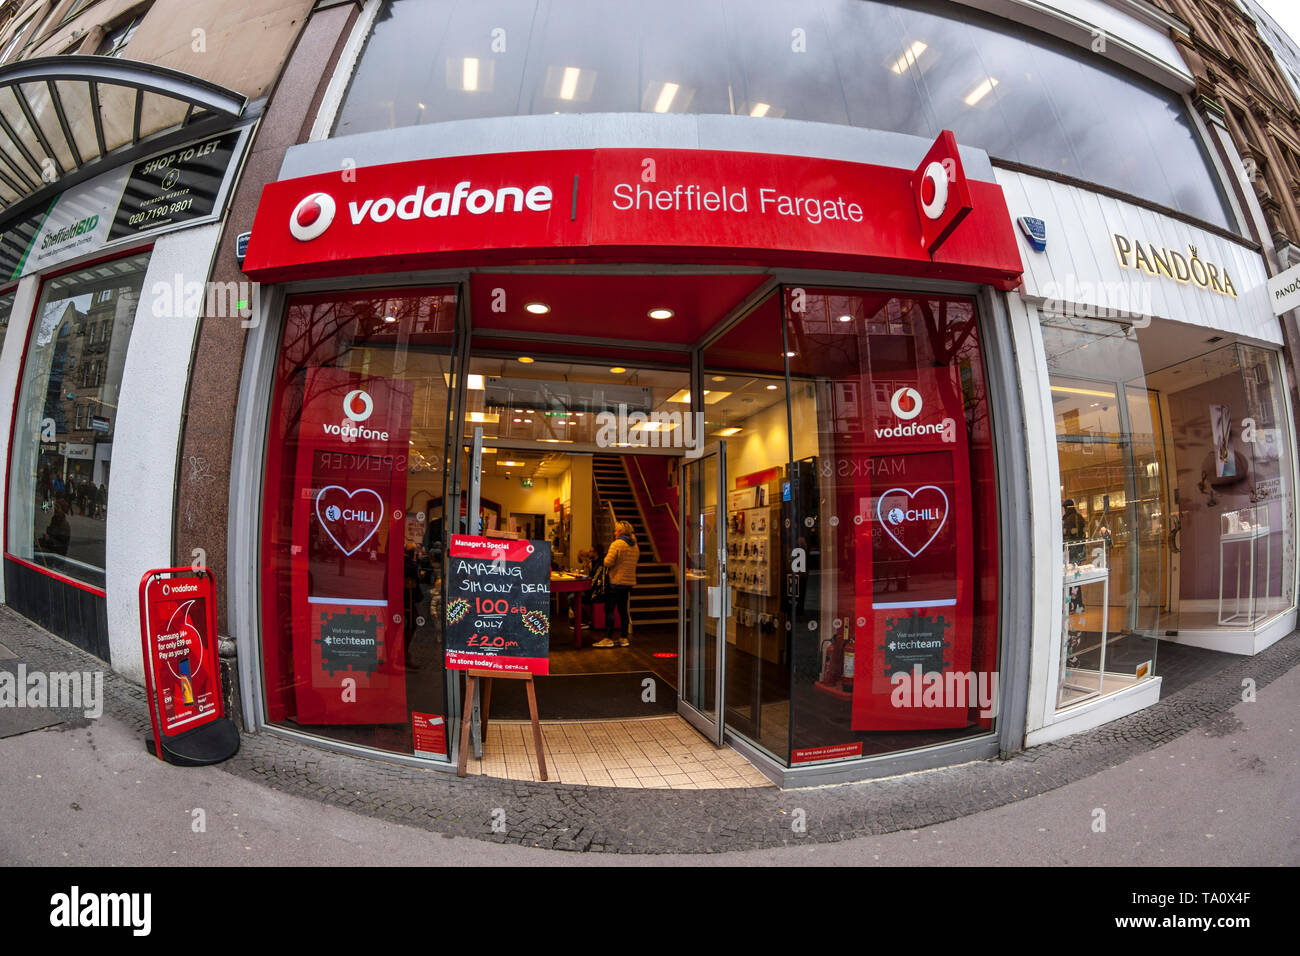 Vodaphone shop, fisheye view Stock Photo